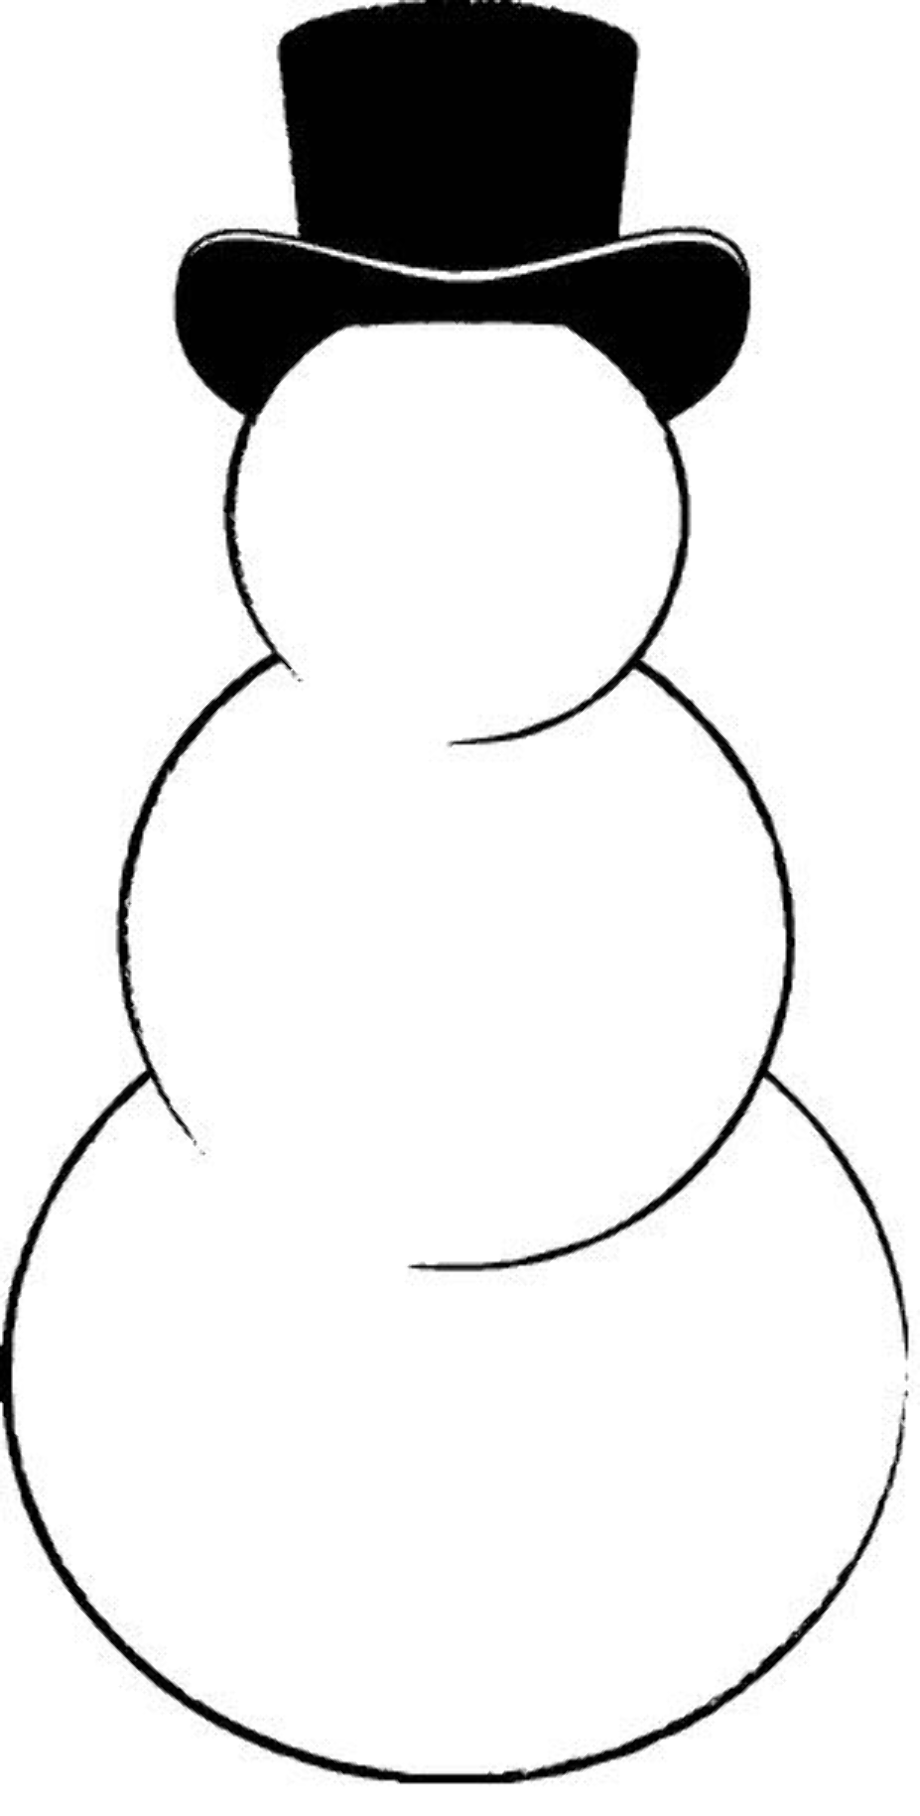 Snowman blank